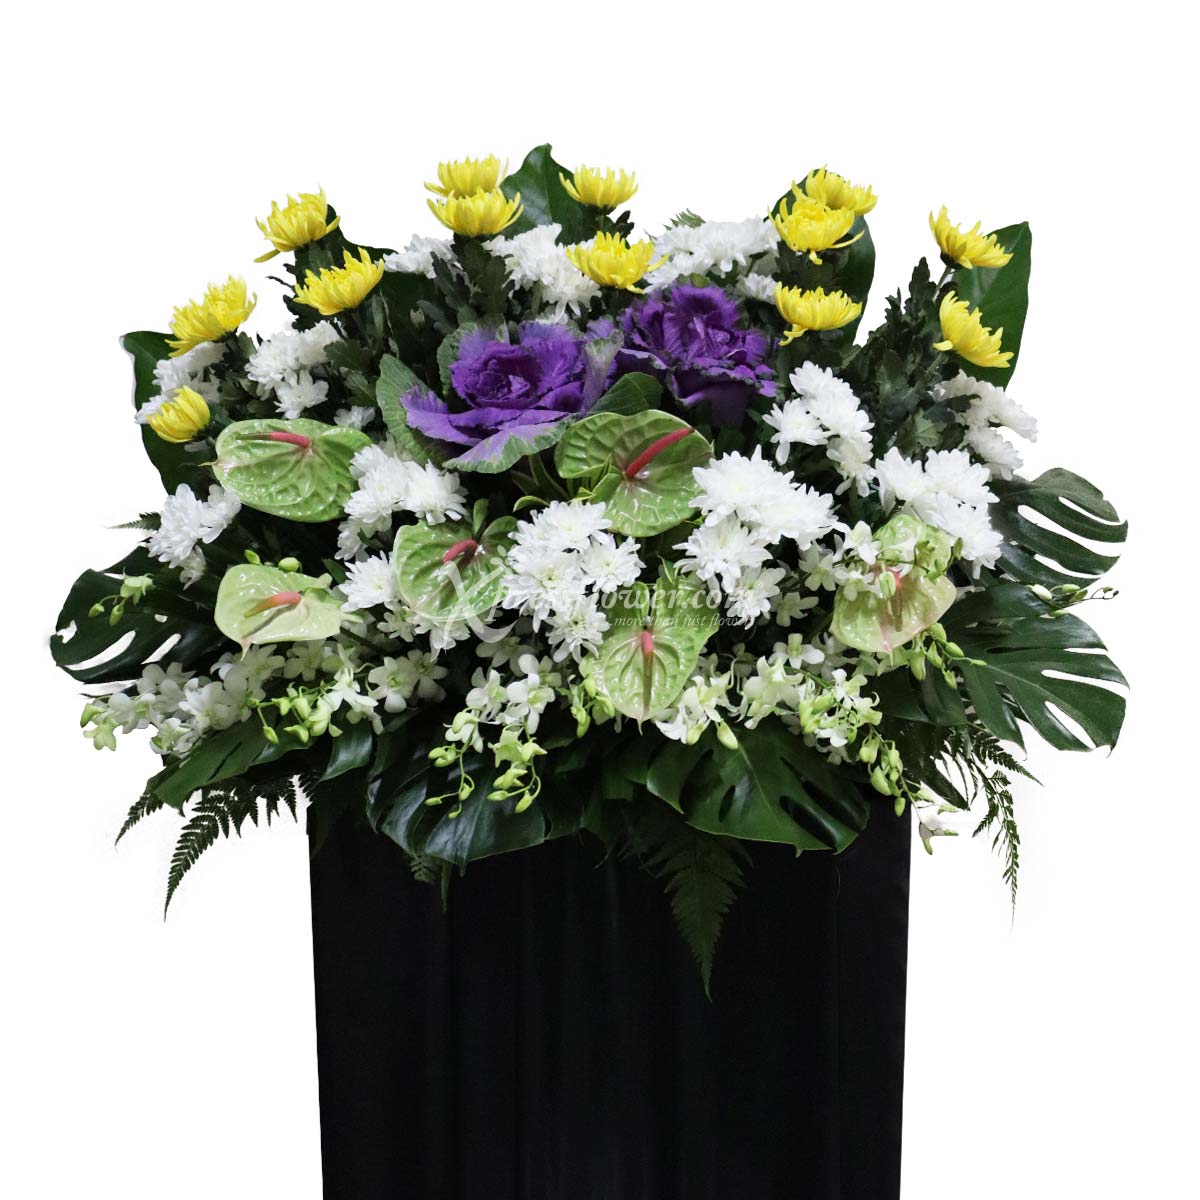 Last Departure (Funeral Condolence Flowers)